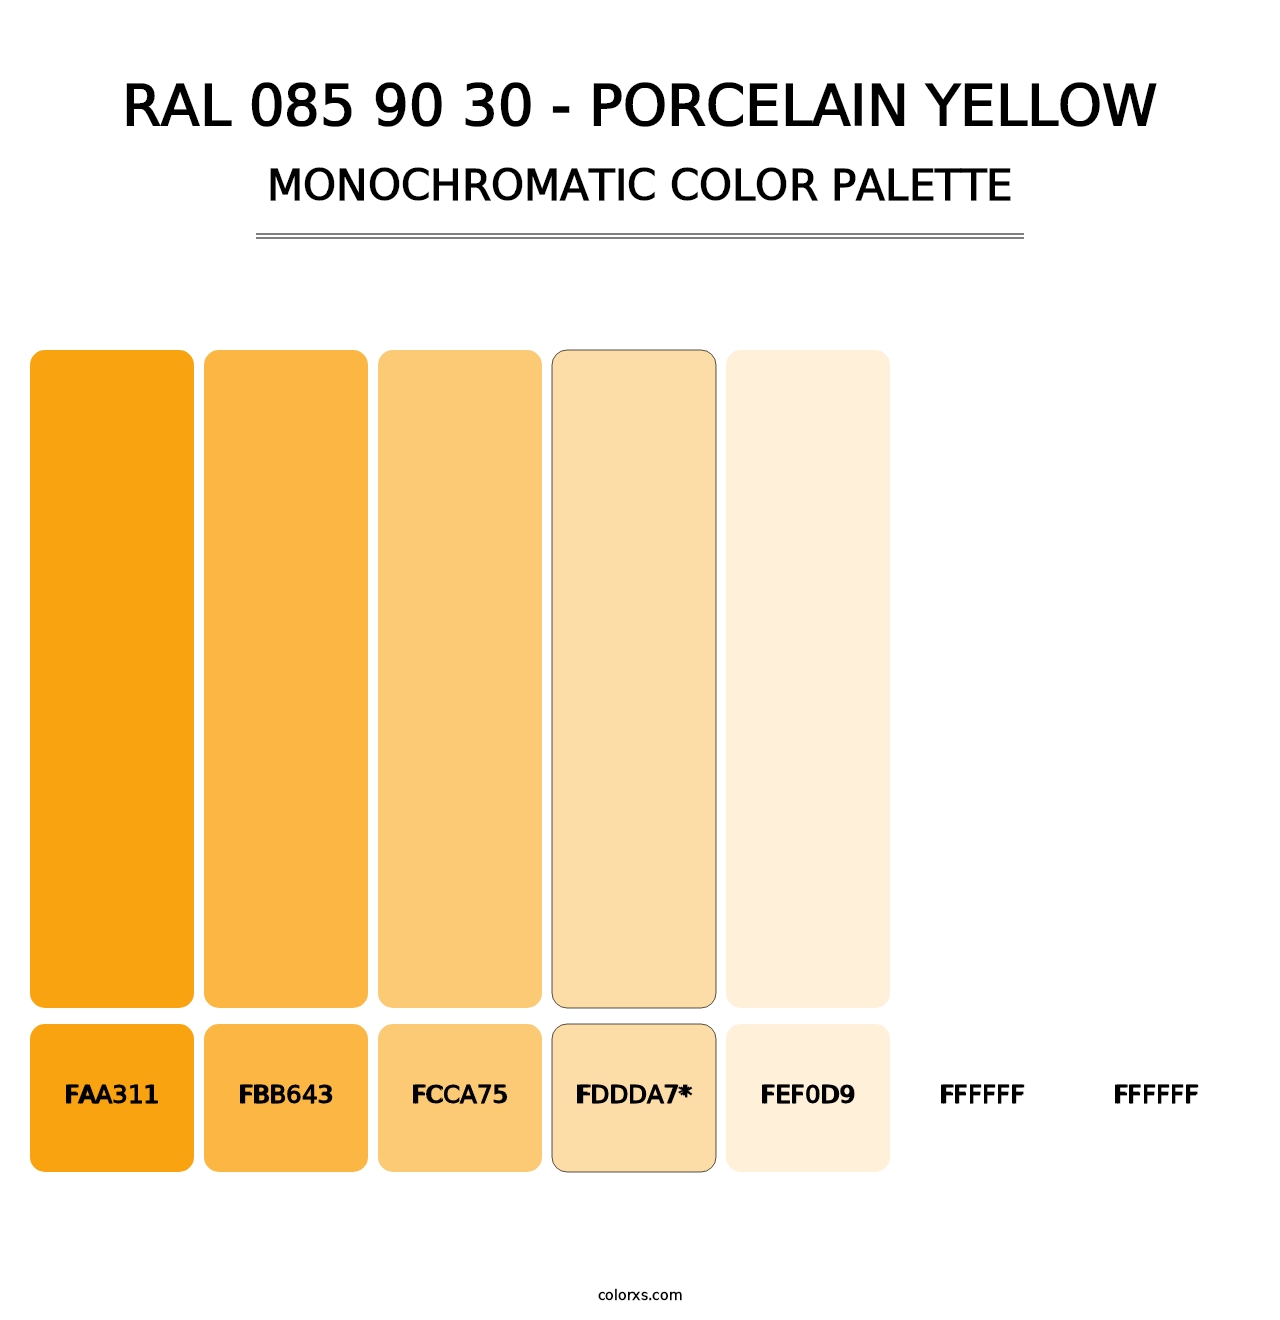 RAL 085 90 30 - Porcelain Yellow - Monochromatic Color Palette